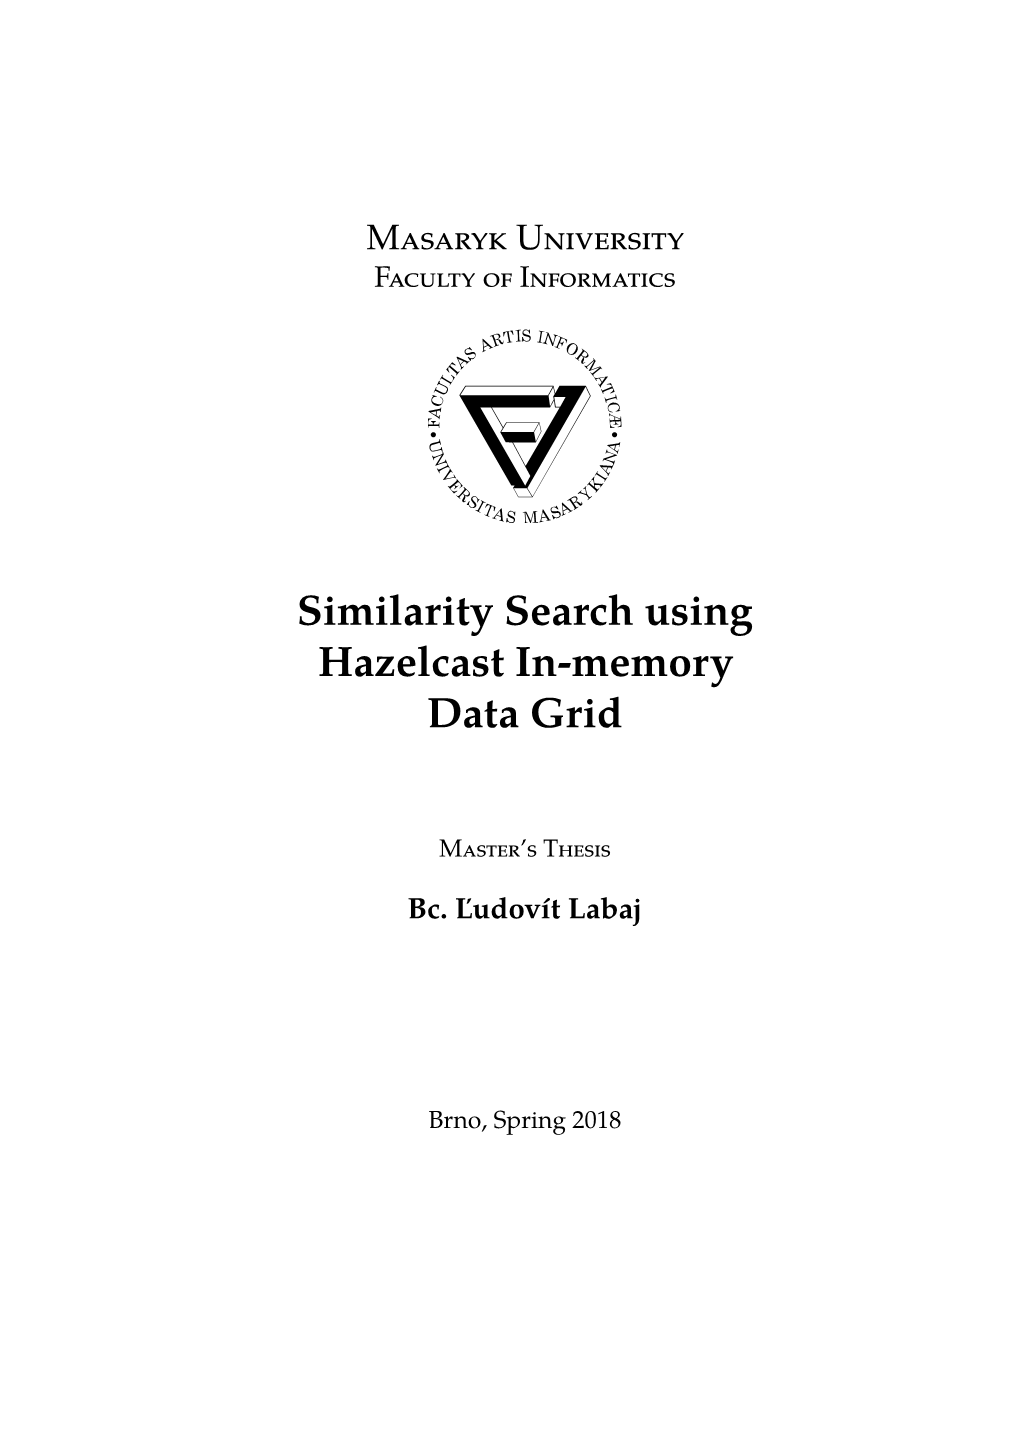 Similarity Search Using Hazelcast In-Memory Data Grid